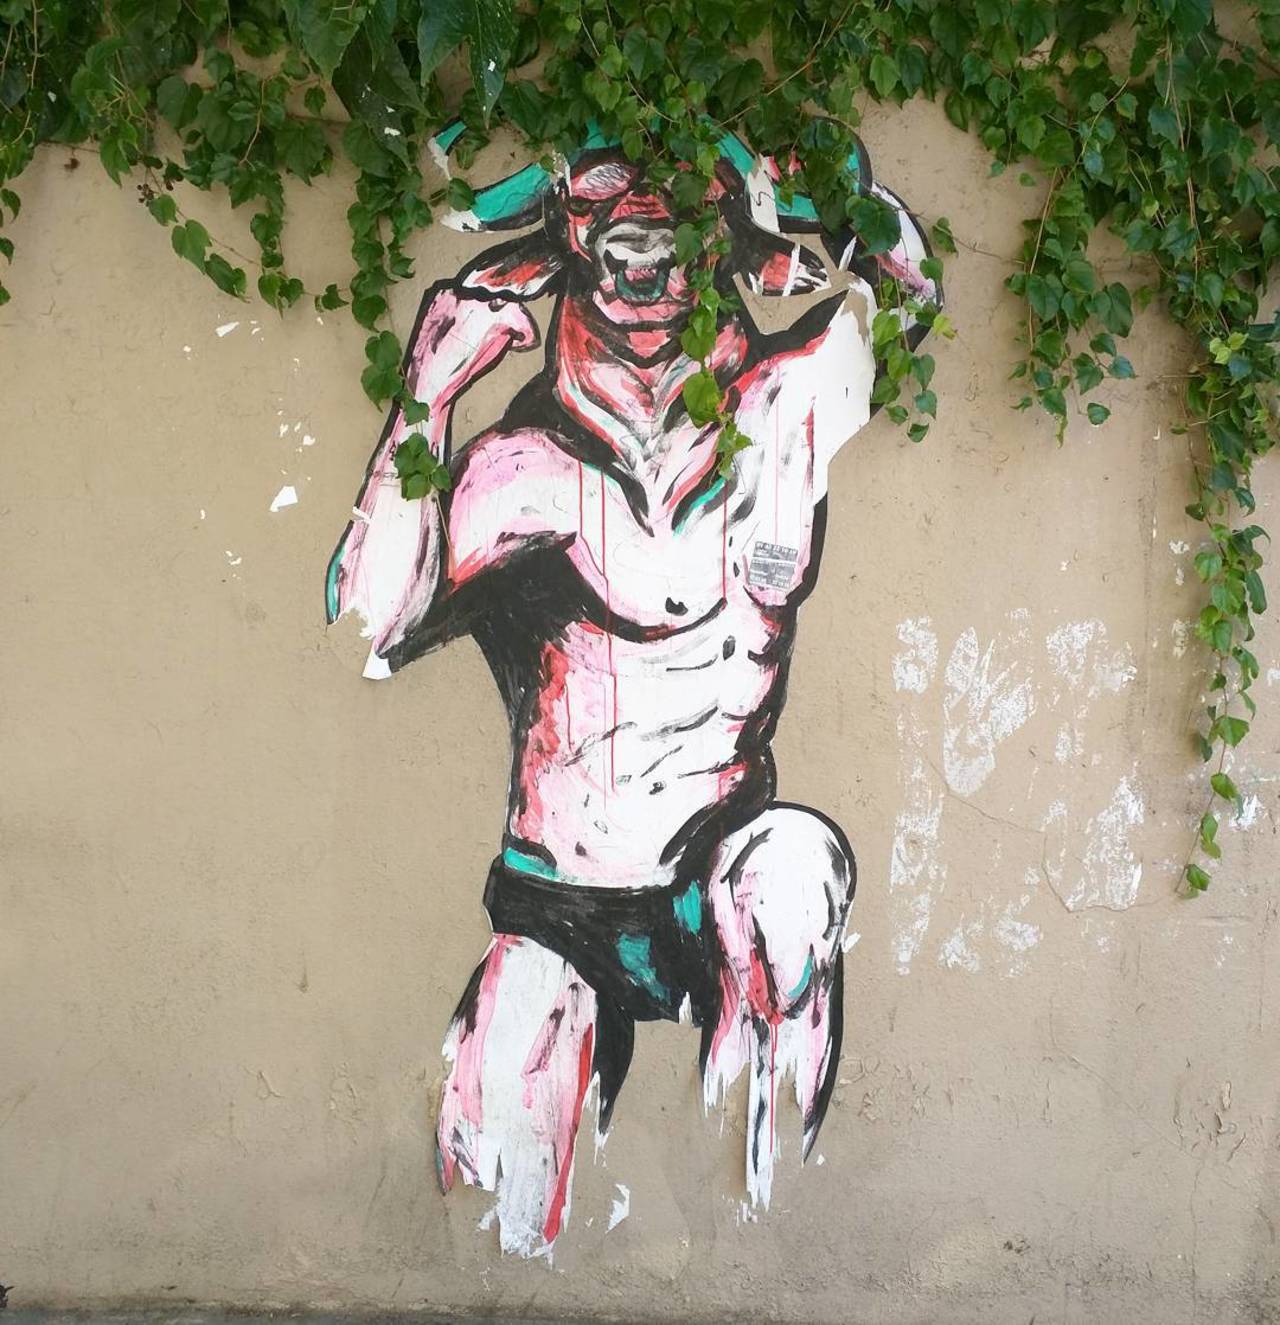 #Paris #graffiti photo by @alphaquadra http://ift.tt/1LeM0HJ #StreetArt http://t.co/9OWBLn8o8d